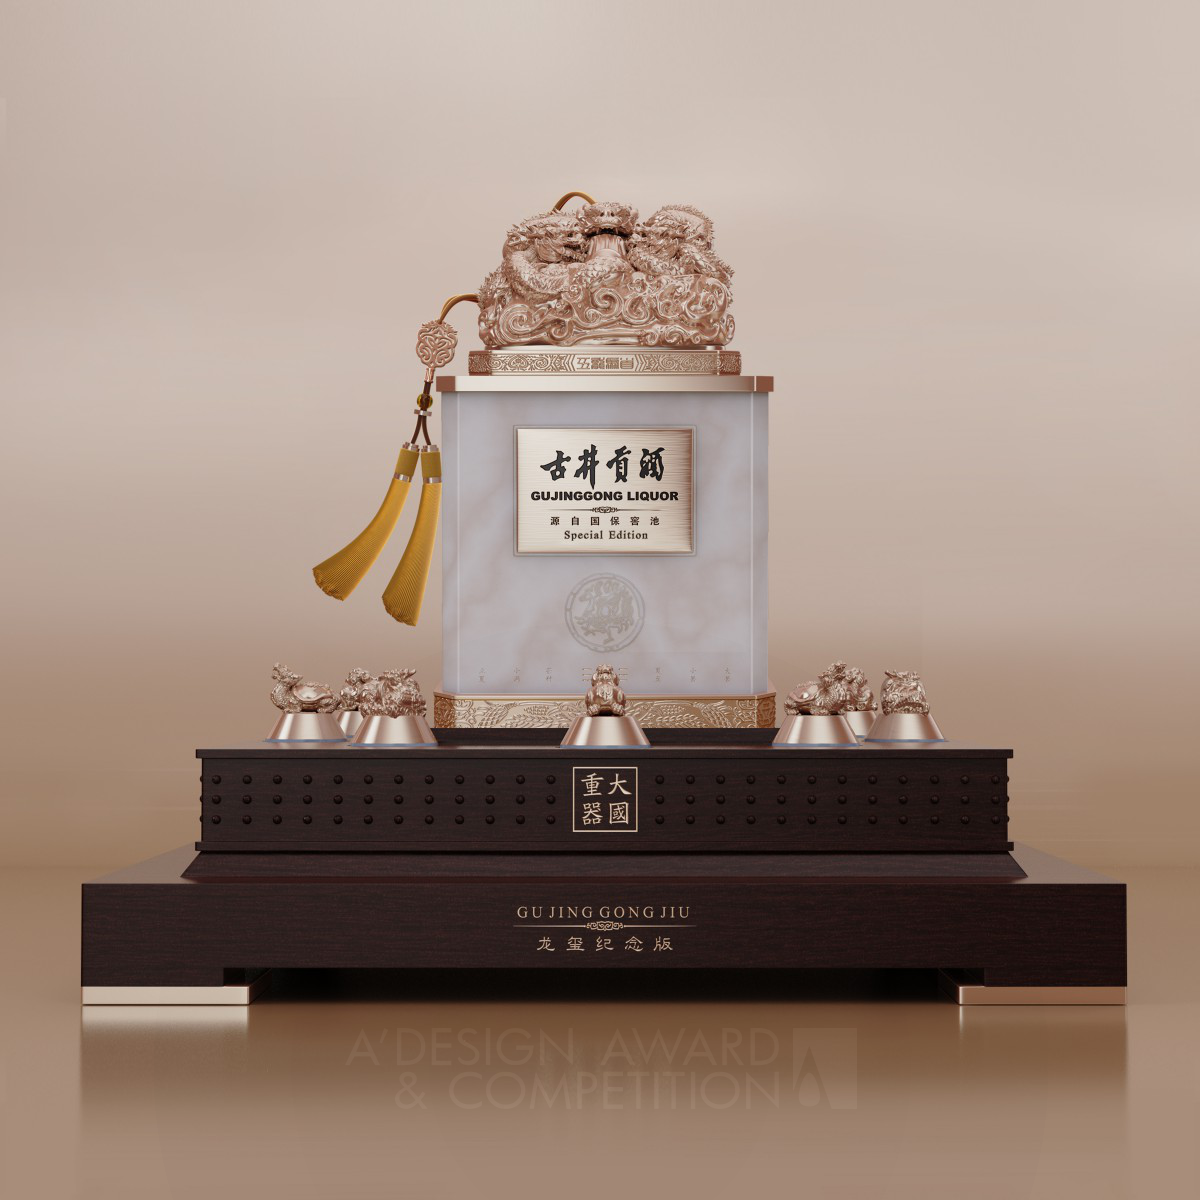 Hua Yun wins Iron at the prestigious A' Packaging Design Award with Gujin-National Treasure Chinese Baijiu Packaging.